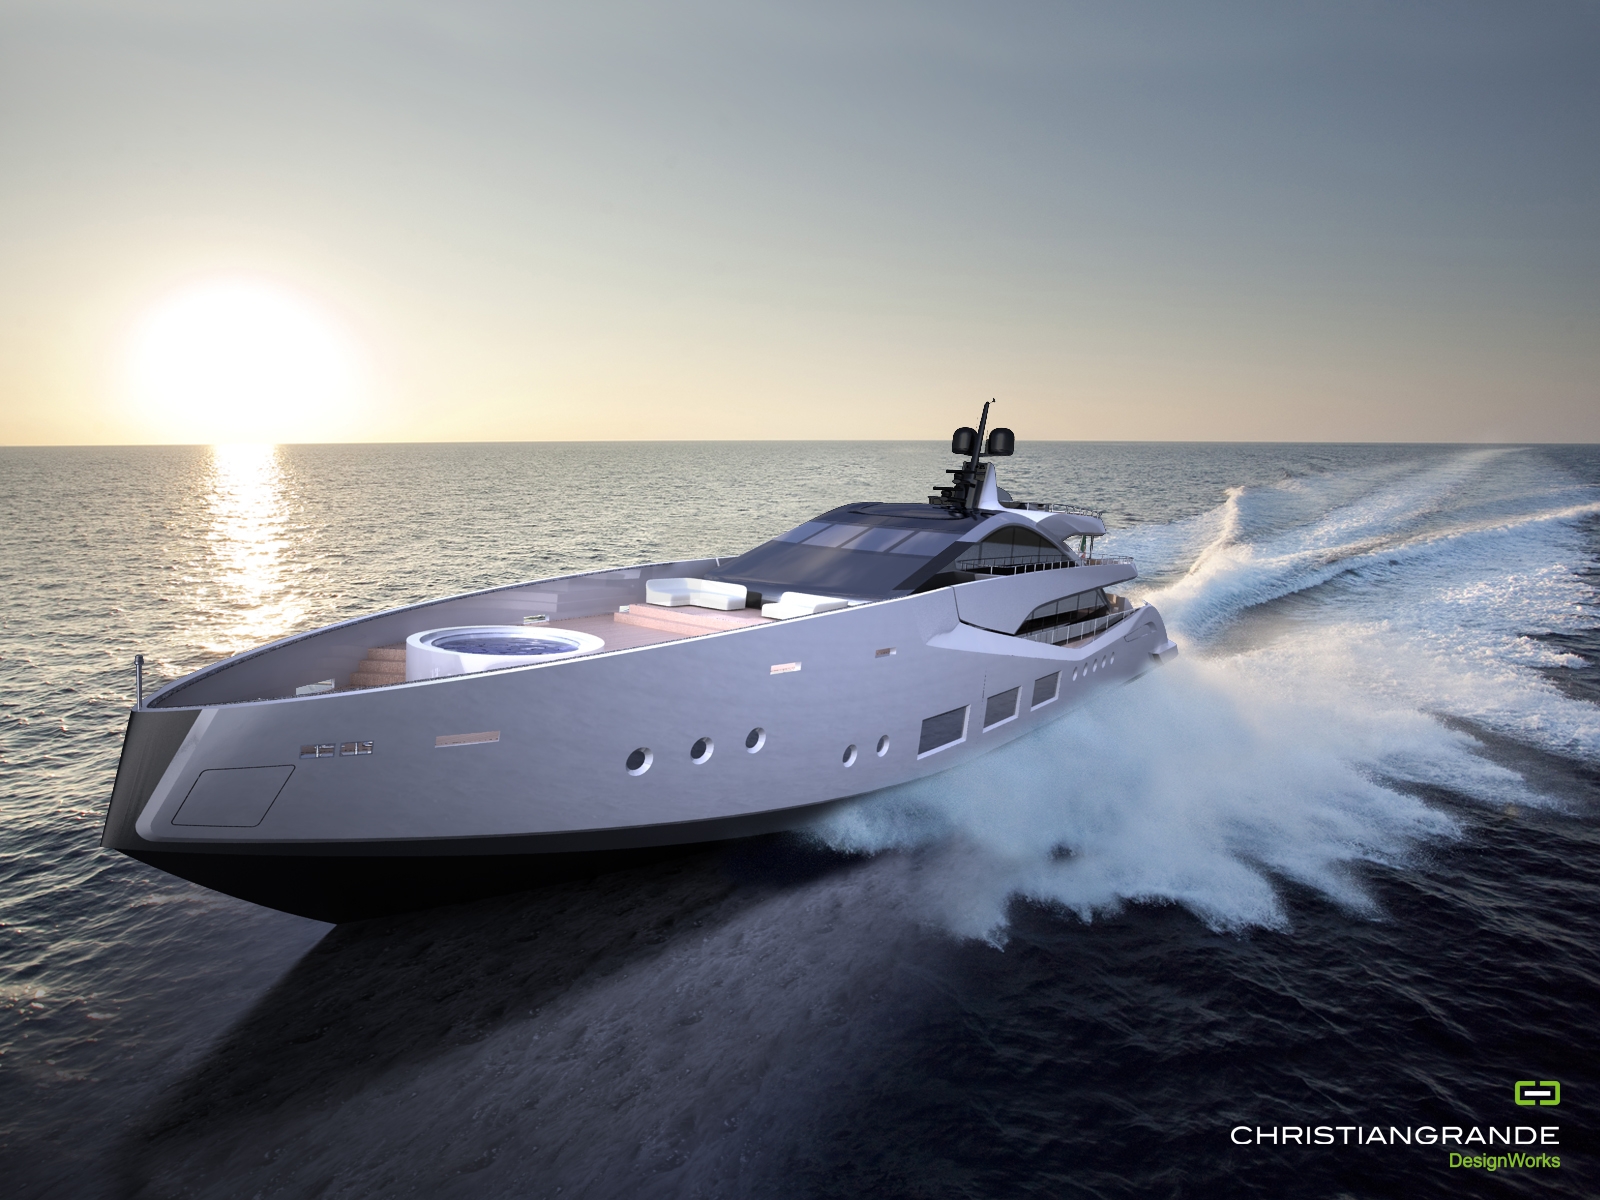 Christian Grande presents the Acapulco 55 yacht design